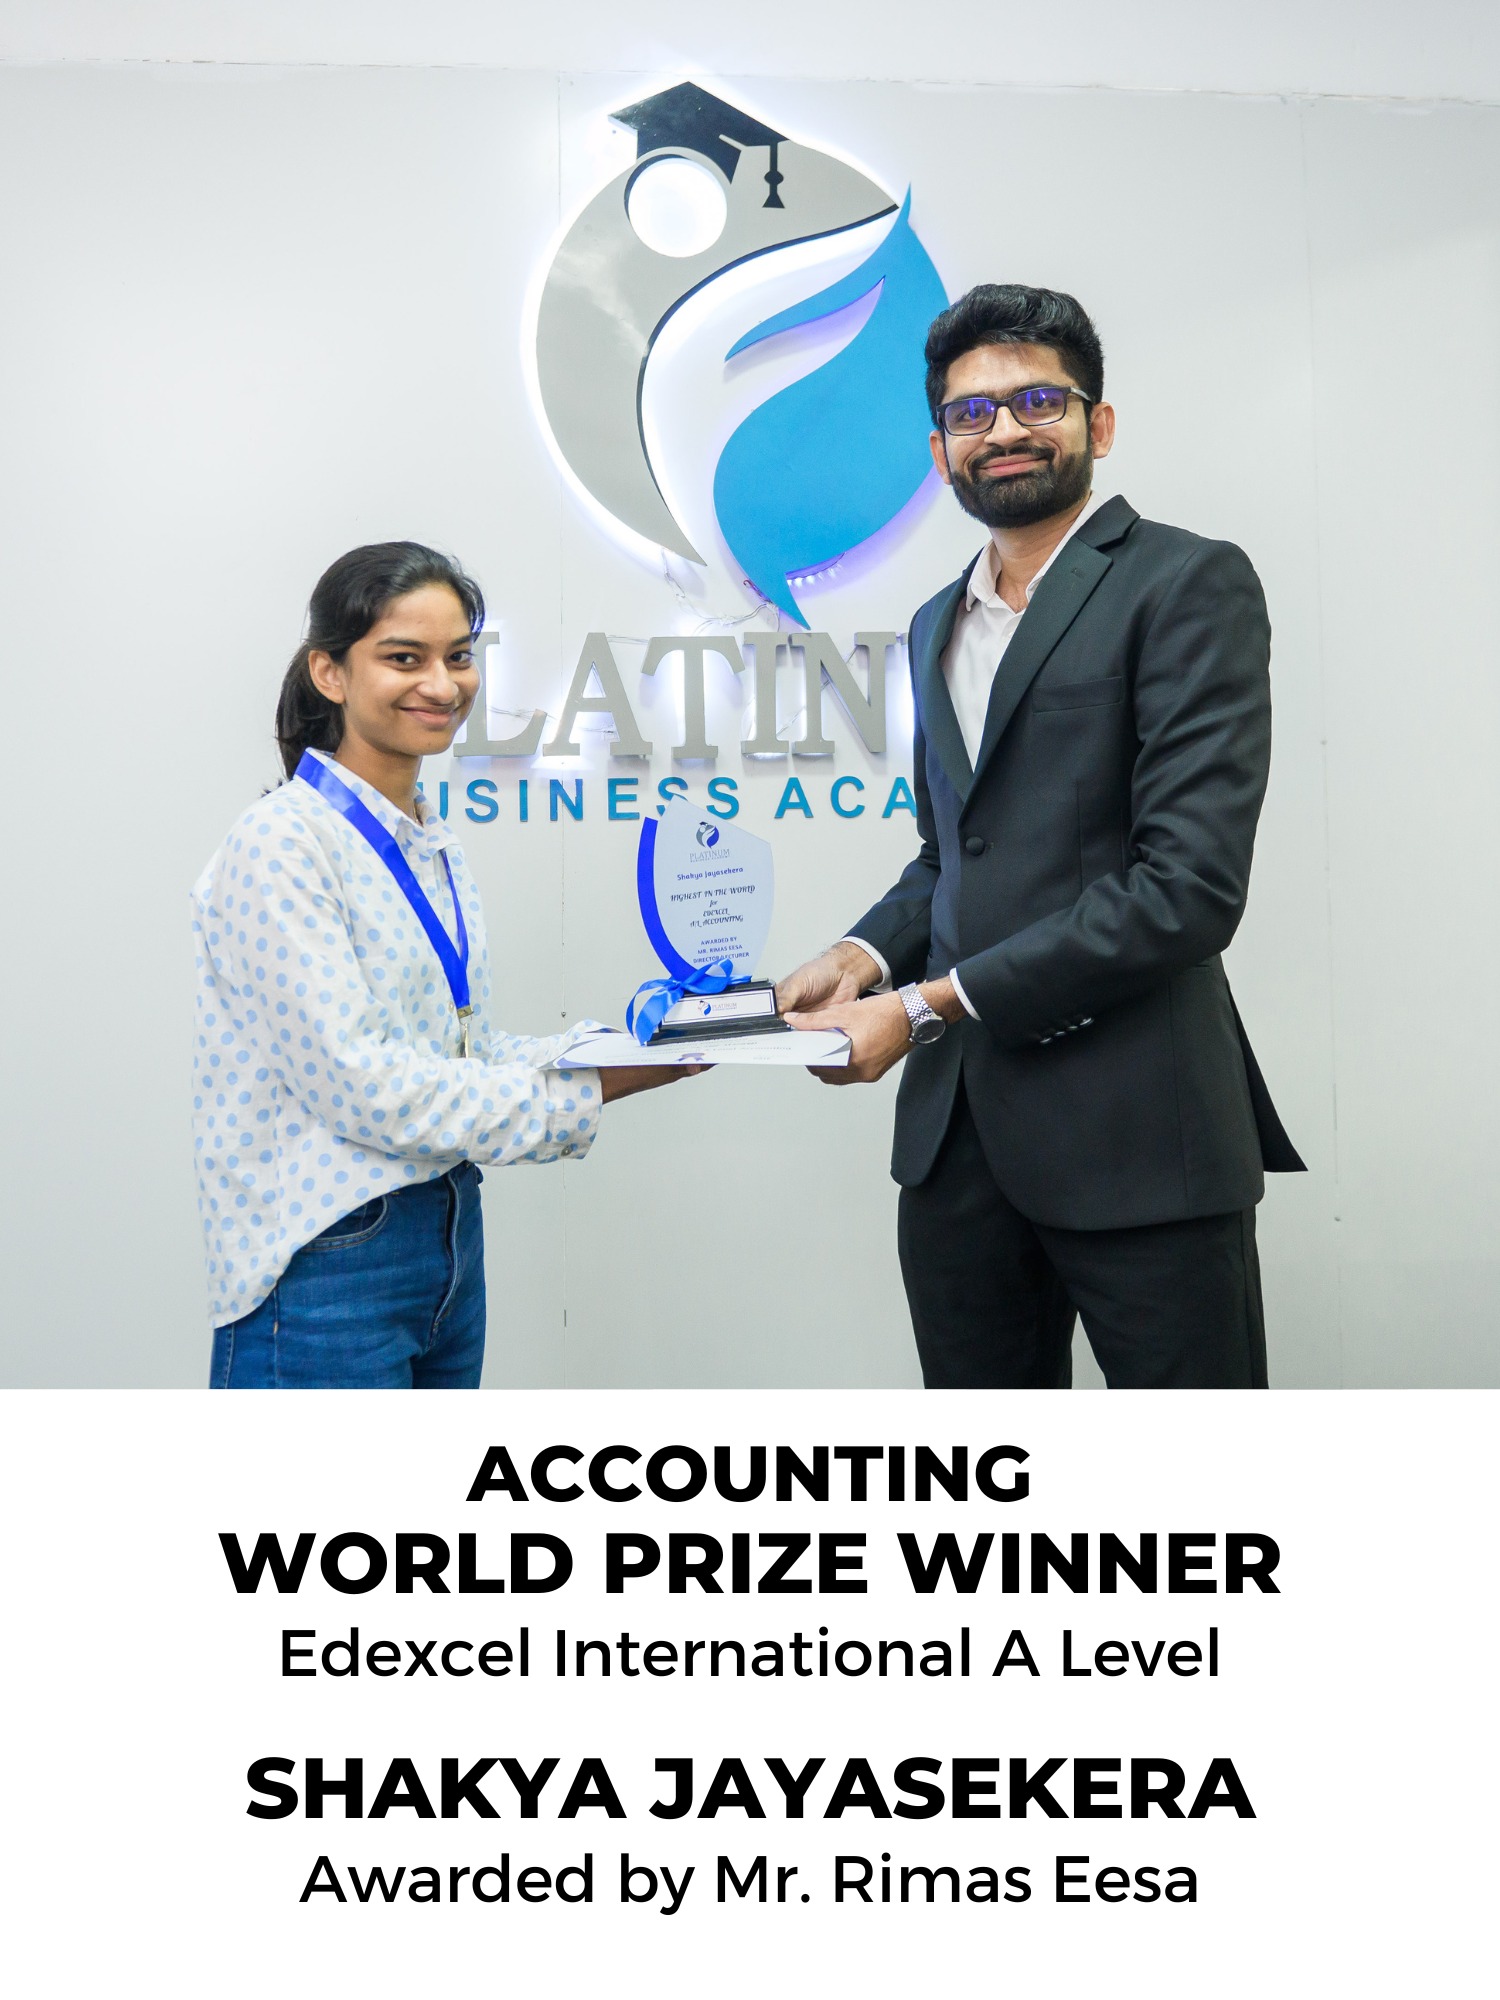 Edexcel A Level Accounting World Prize Winner: Shakya Jayasekera
Lecturer: Mr. Rimaz Eesa